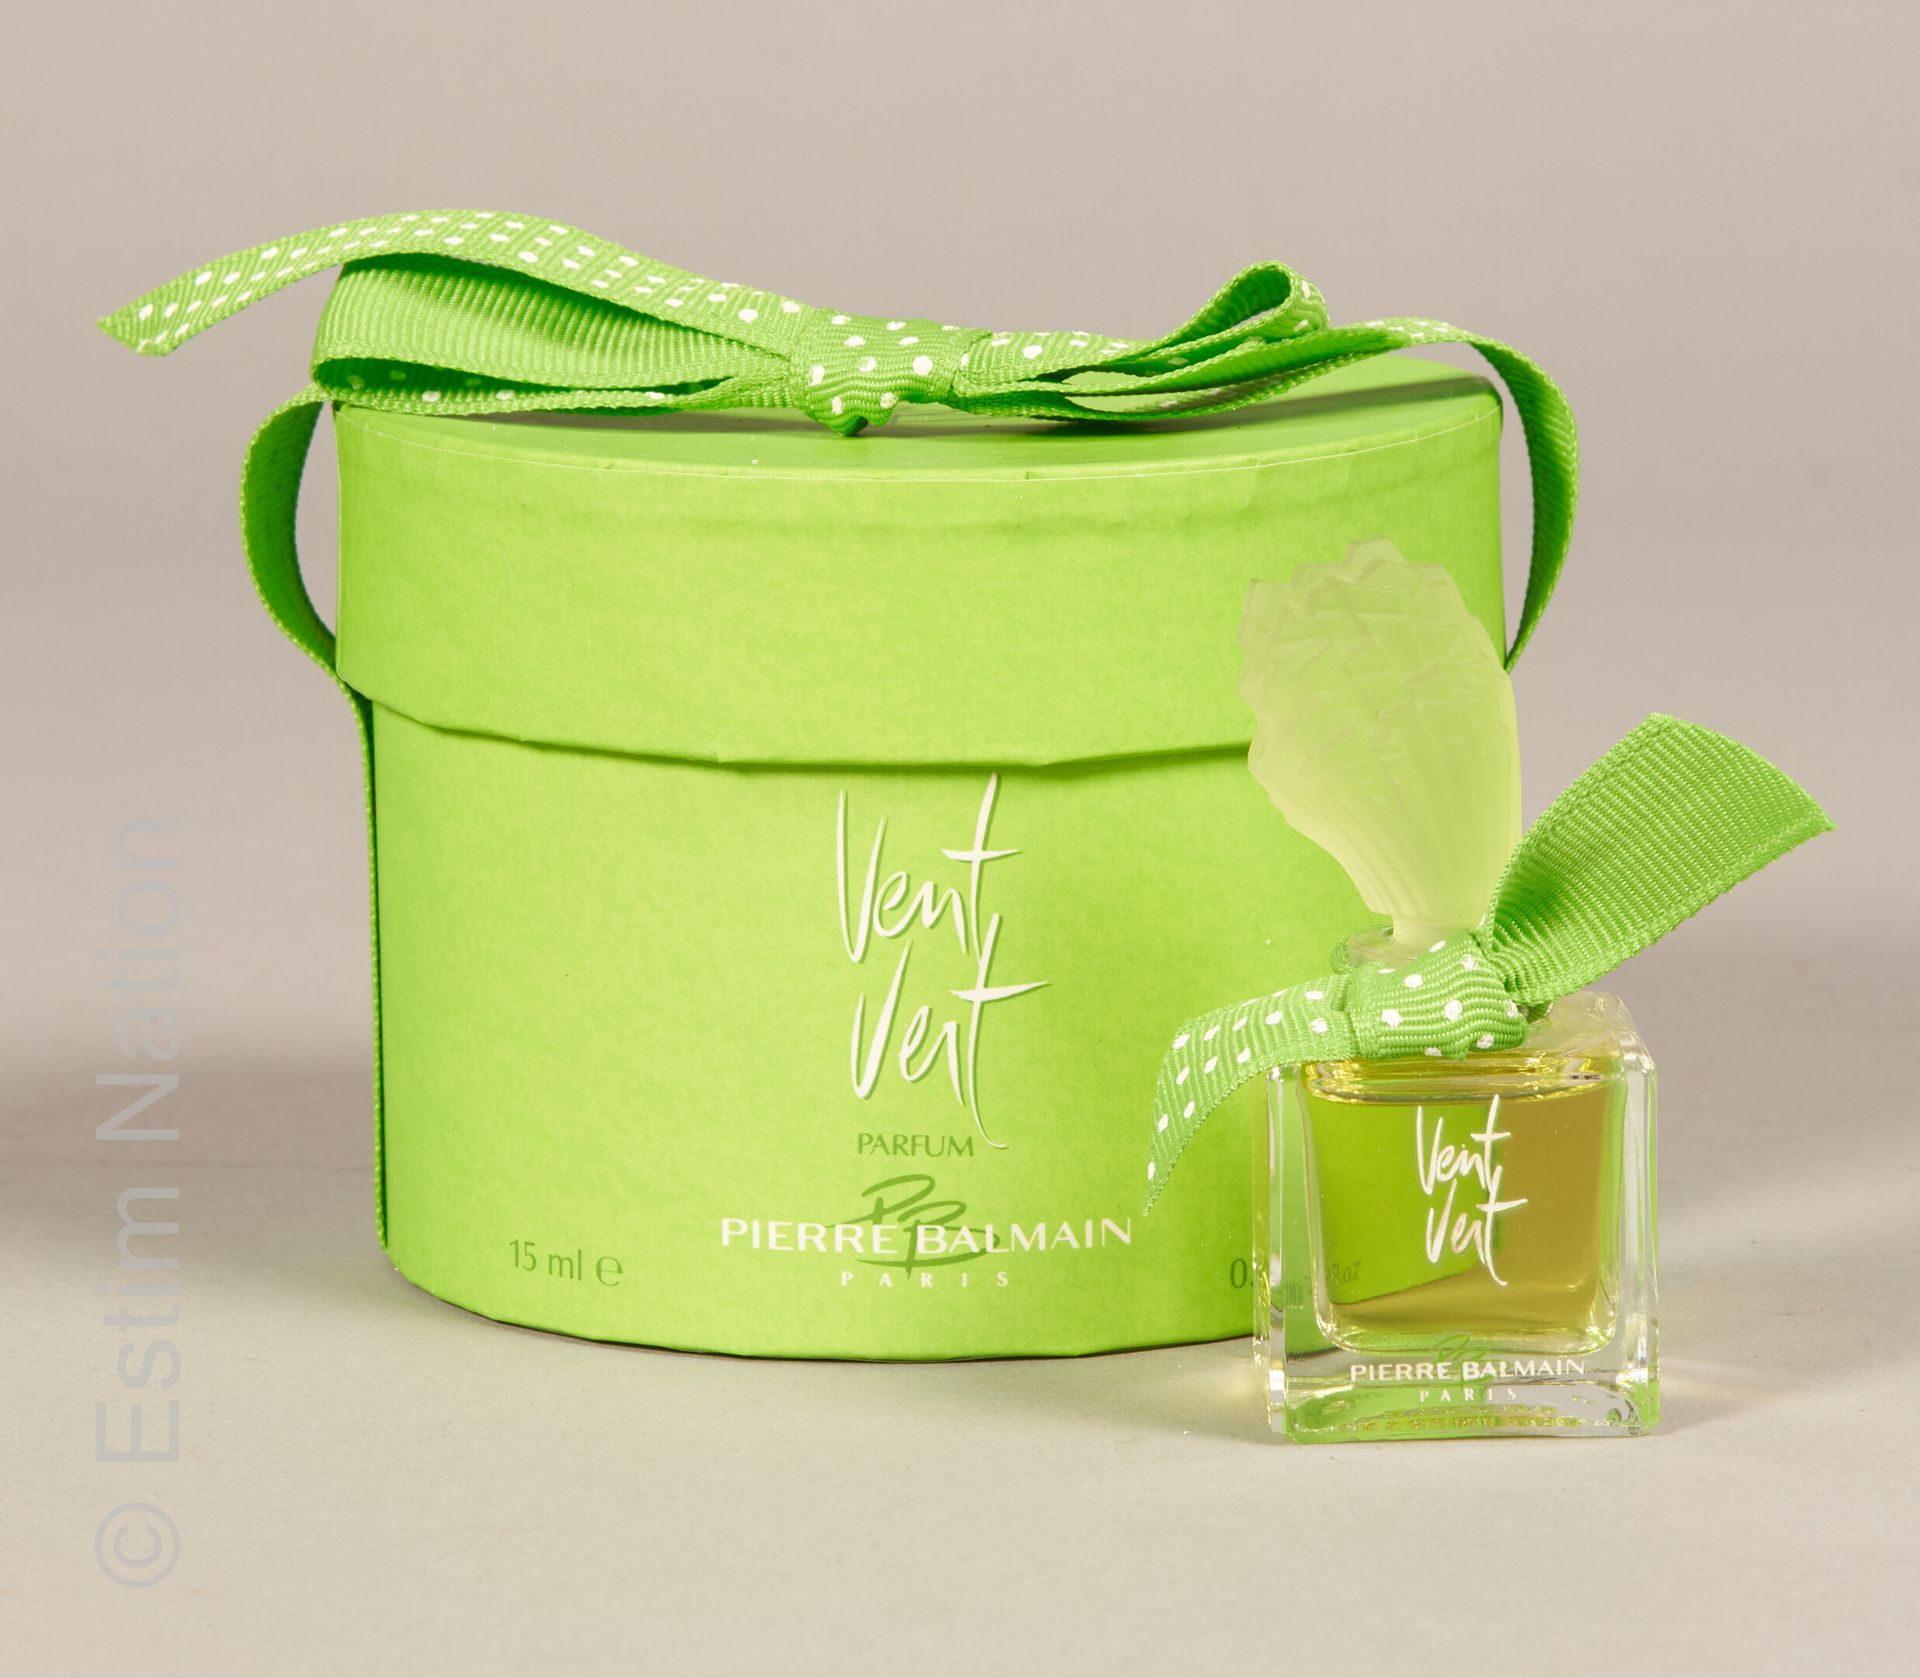 PIERRE BALMAIN "Vent vert" Flacon en verre contenant 15 mL d'extrait de parfum. &hellip;